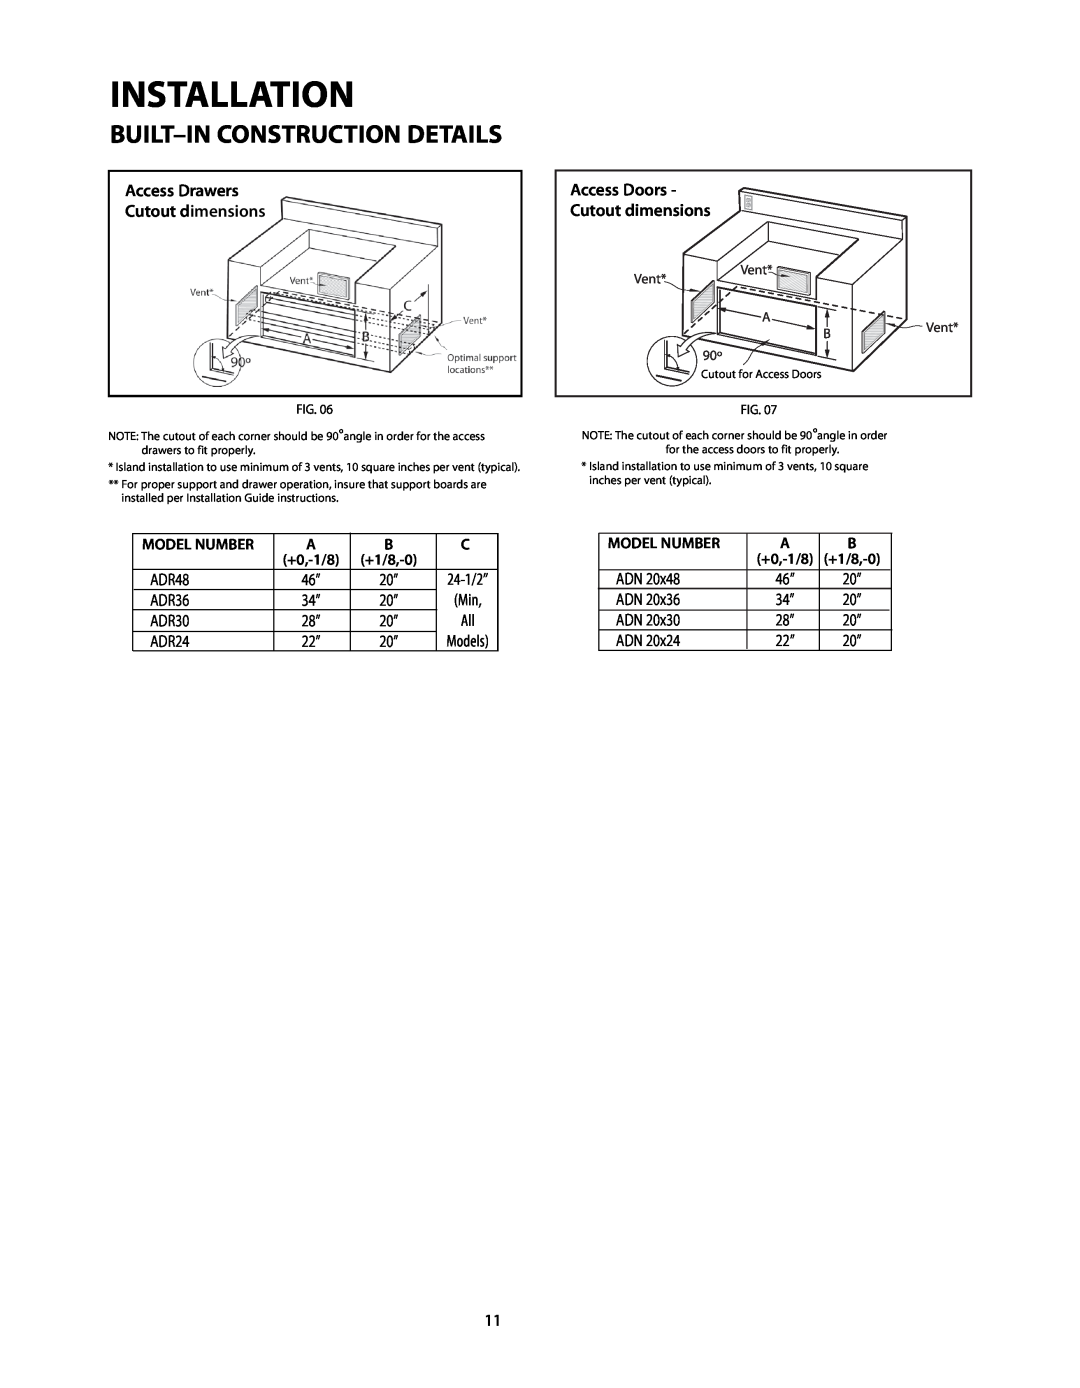 DCS BGB48-BQAR, BGB48-BQR manual Access Drawers Cutout dimensions, Installation, Built-In Construction Details, Models 